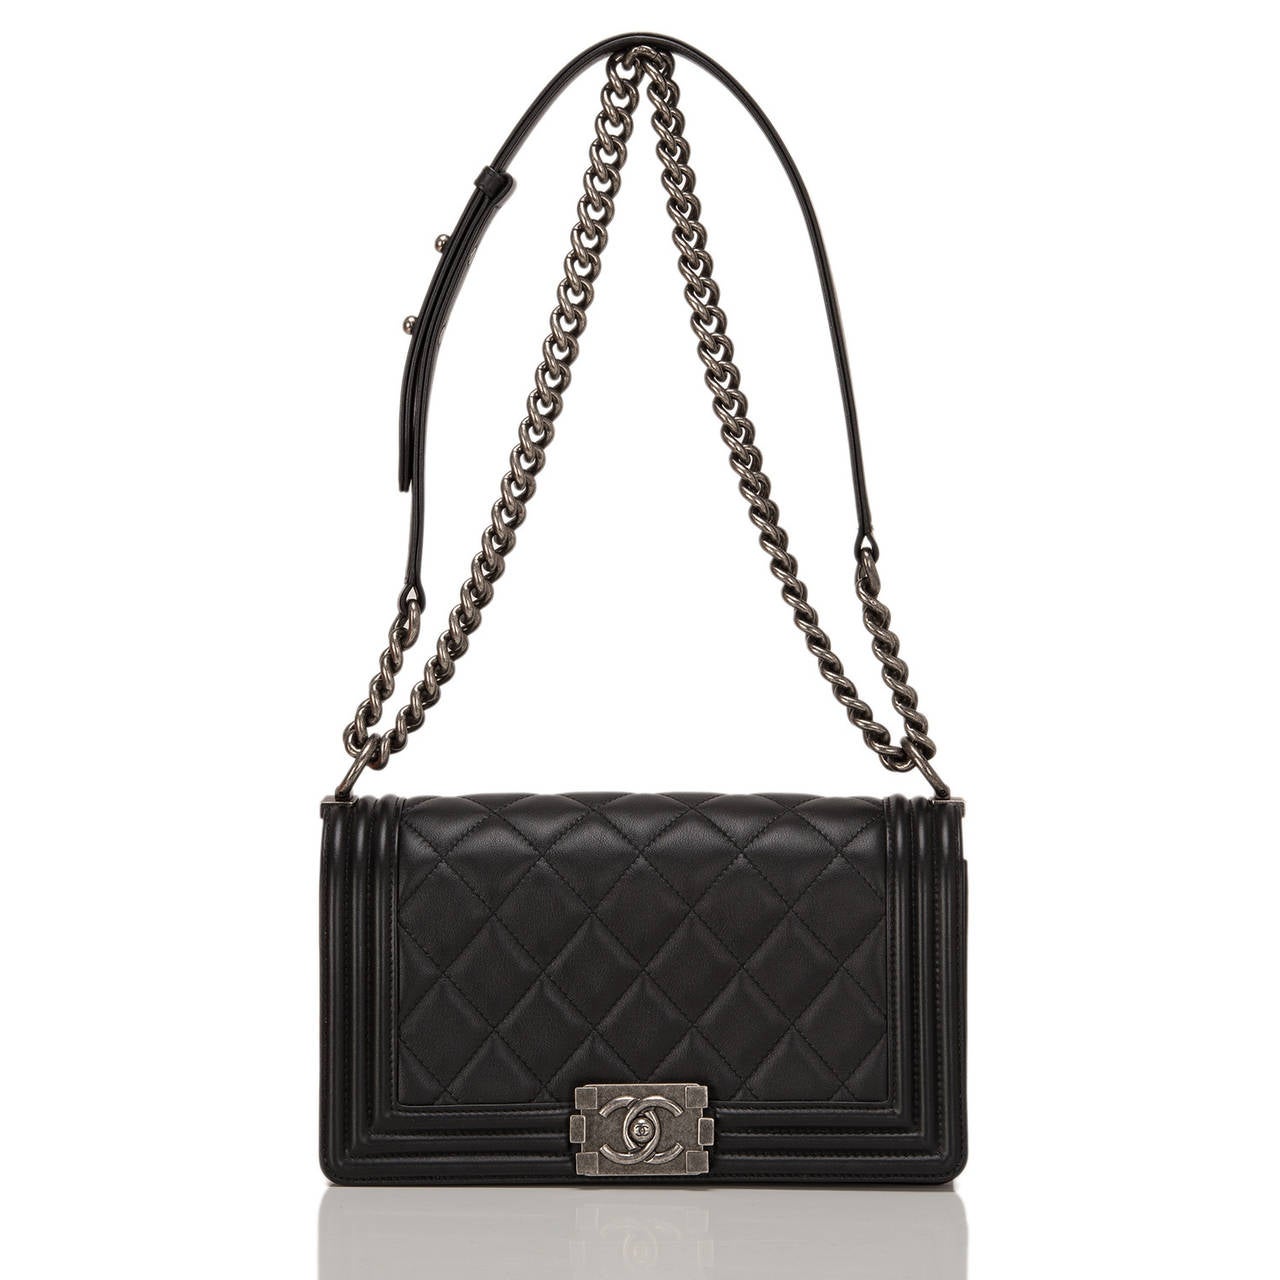 Chanel Black Quilted Calfskin Medium Boy Bag 1